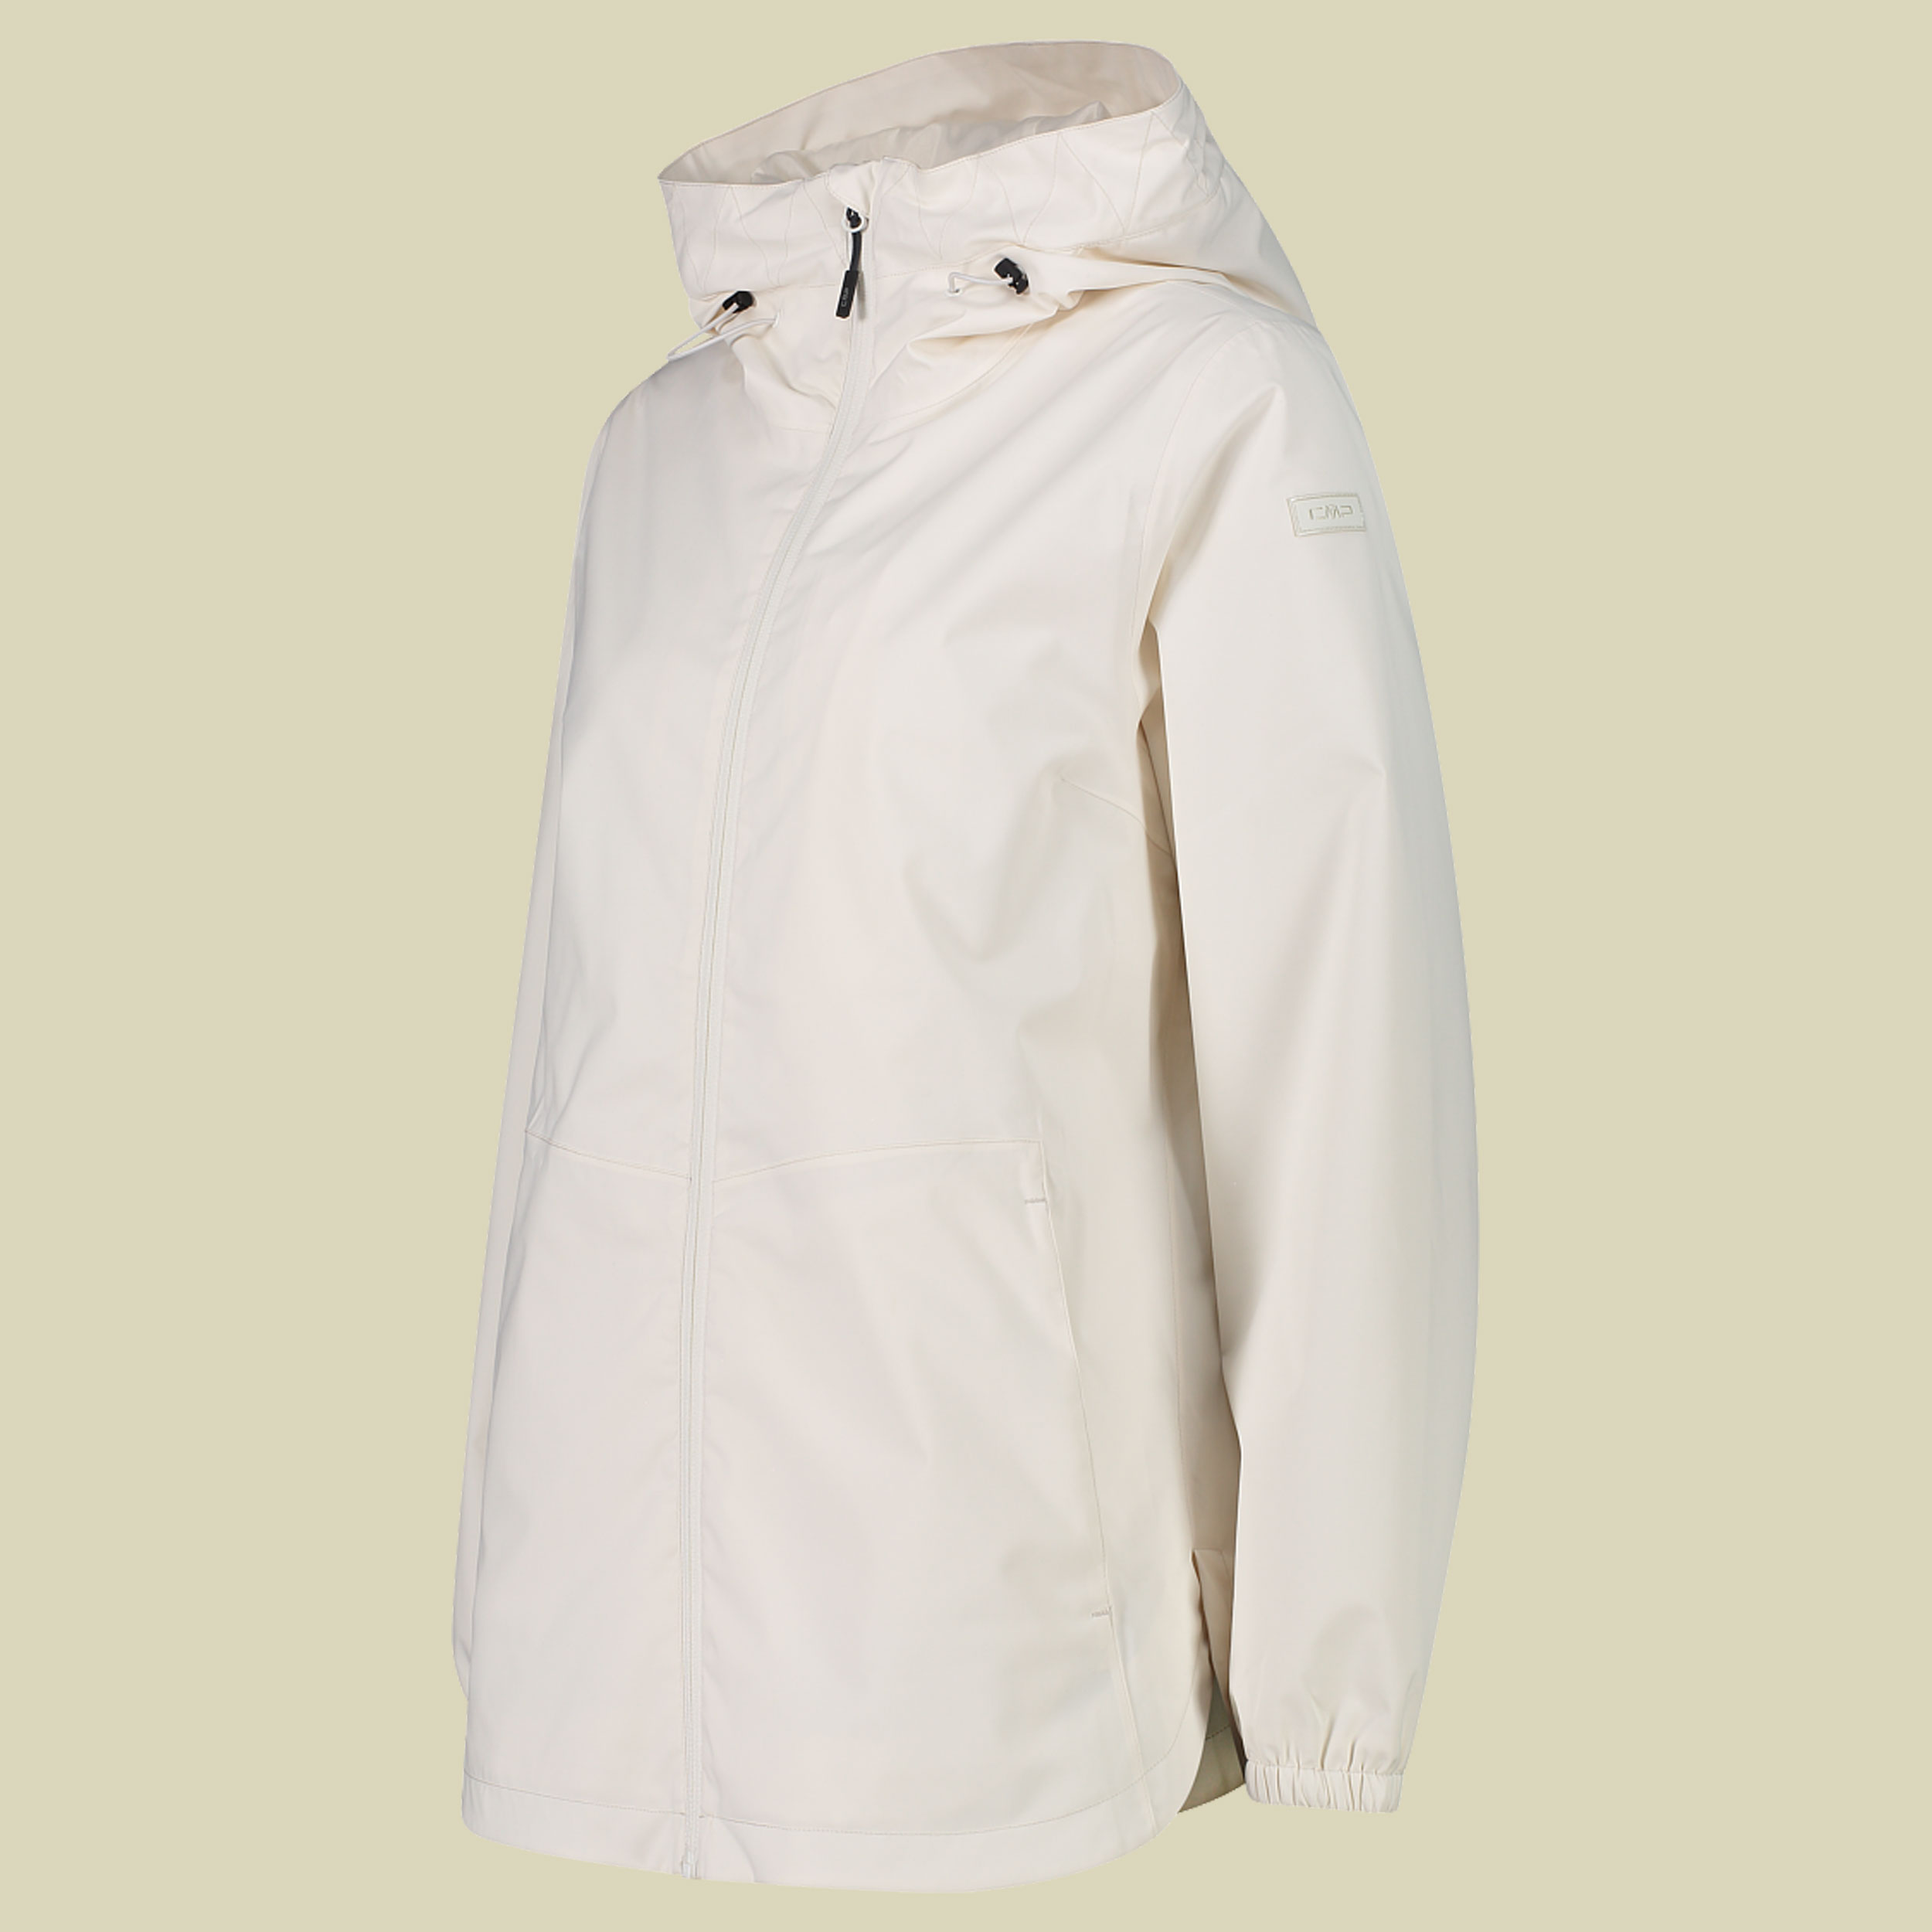 Woman Jacket Fix Hood 34Z5426 44 weiß - A145 offwhite